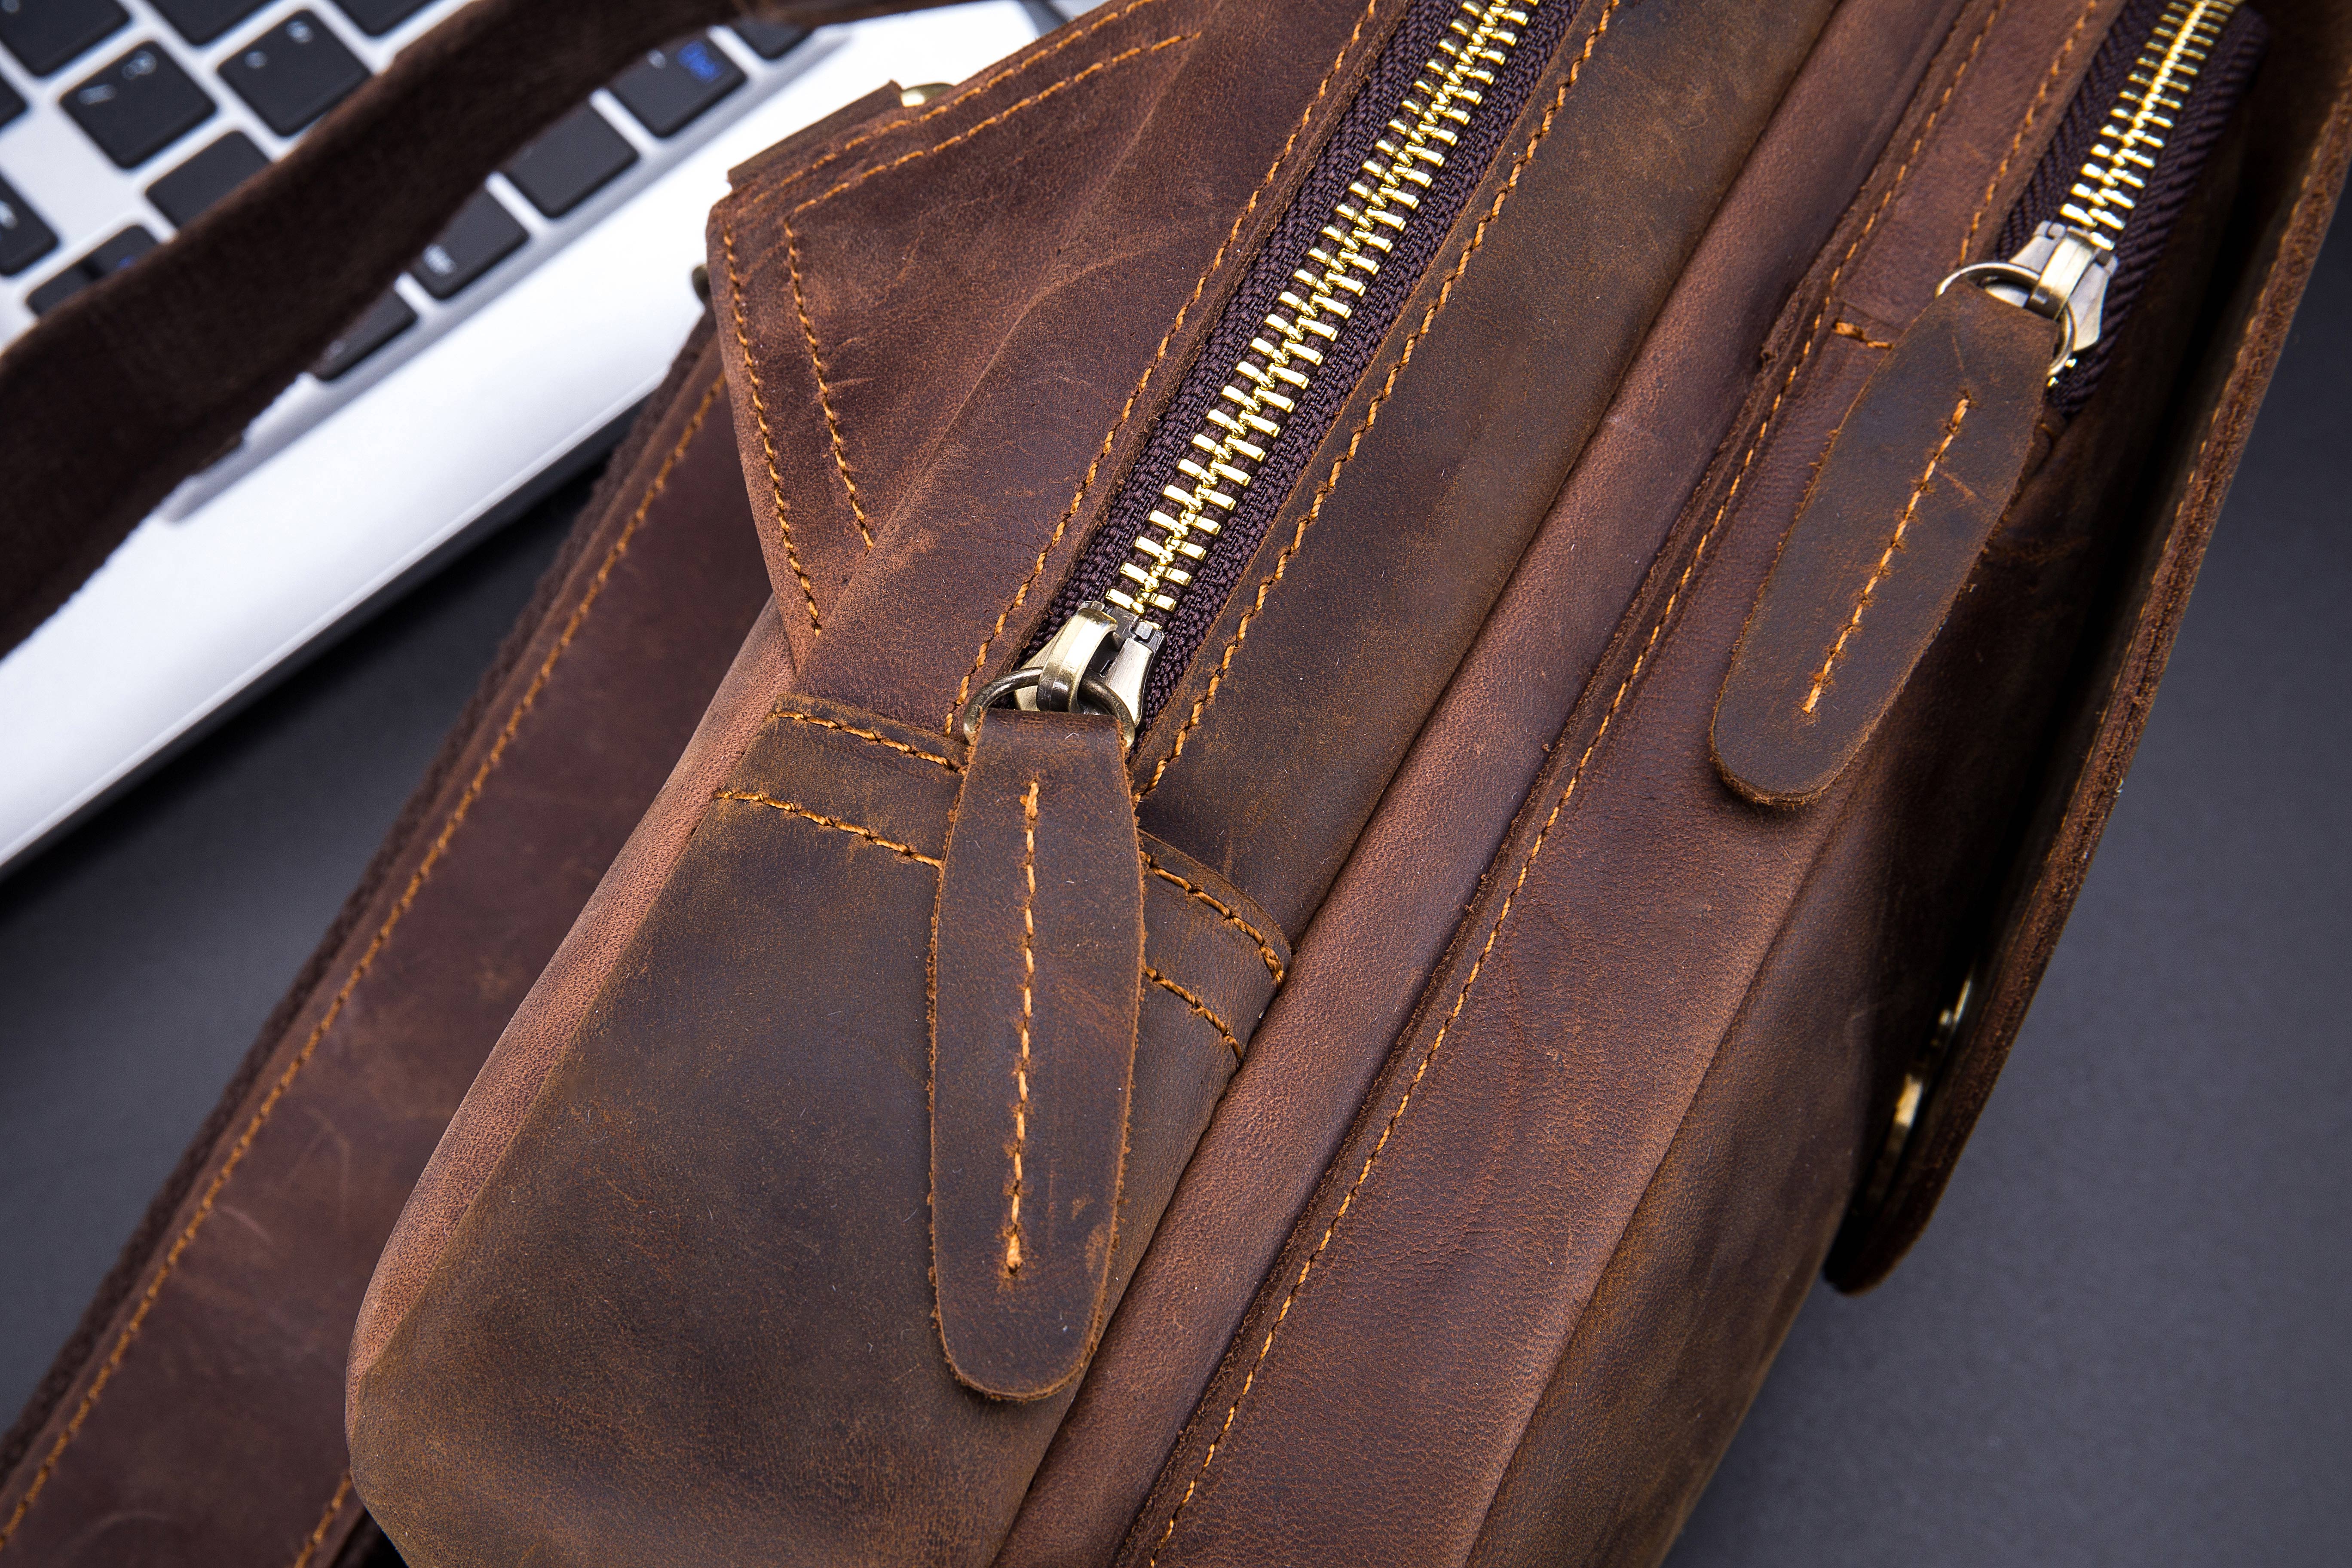 Bullcaptain Crazy Horse Leather Sling Bag Vintage Chest Men Bag Crossbody Small Shoulder Sachel Bags For Men - 133